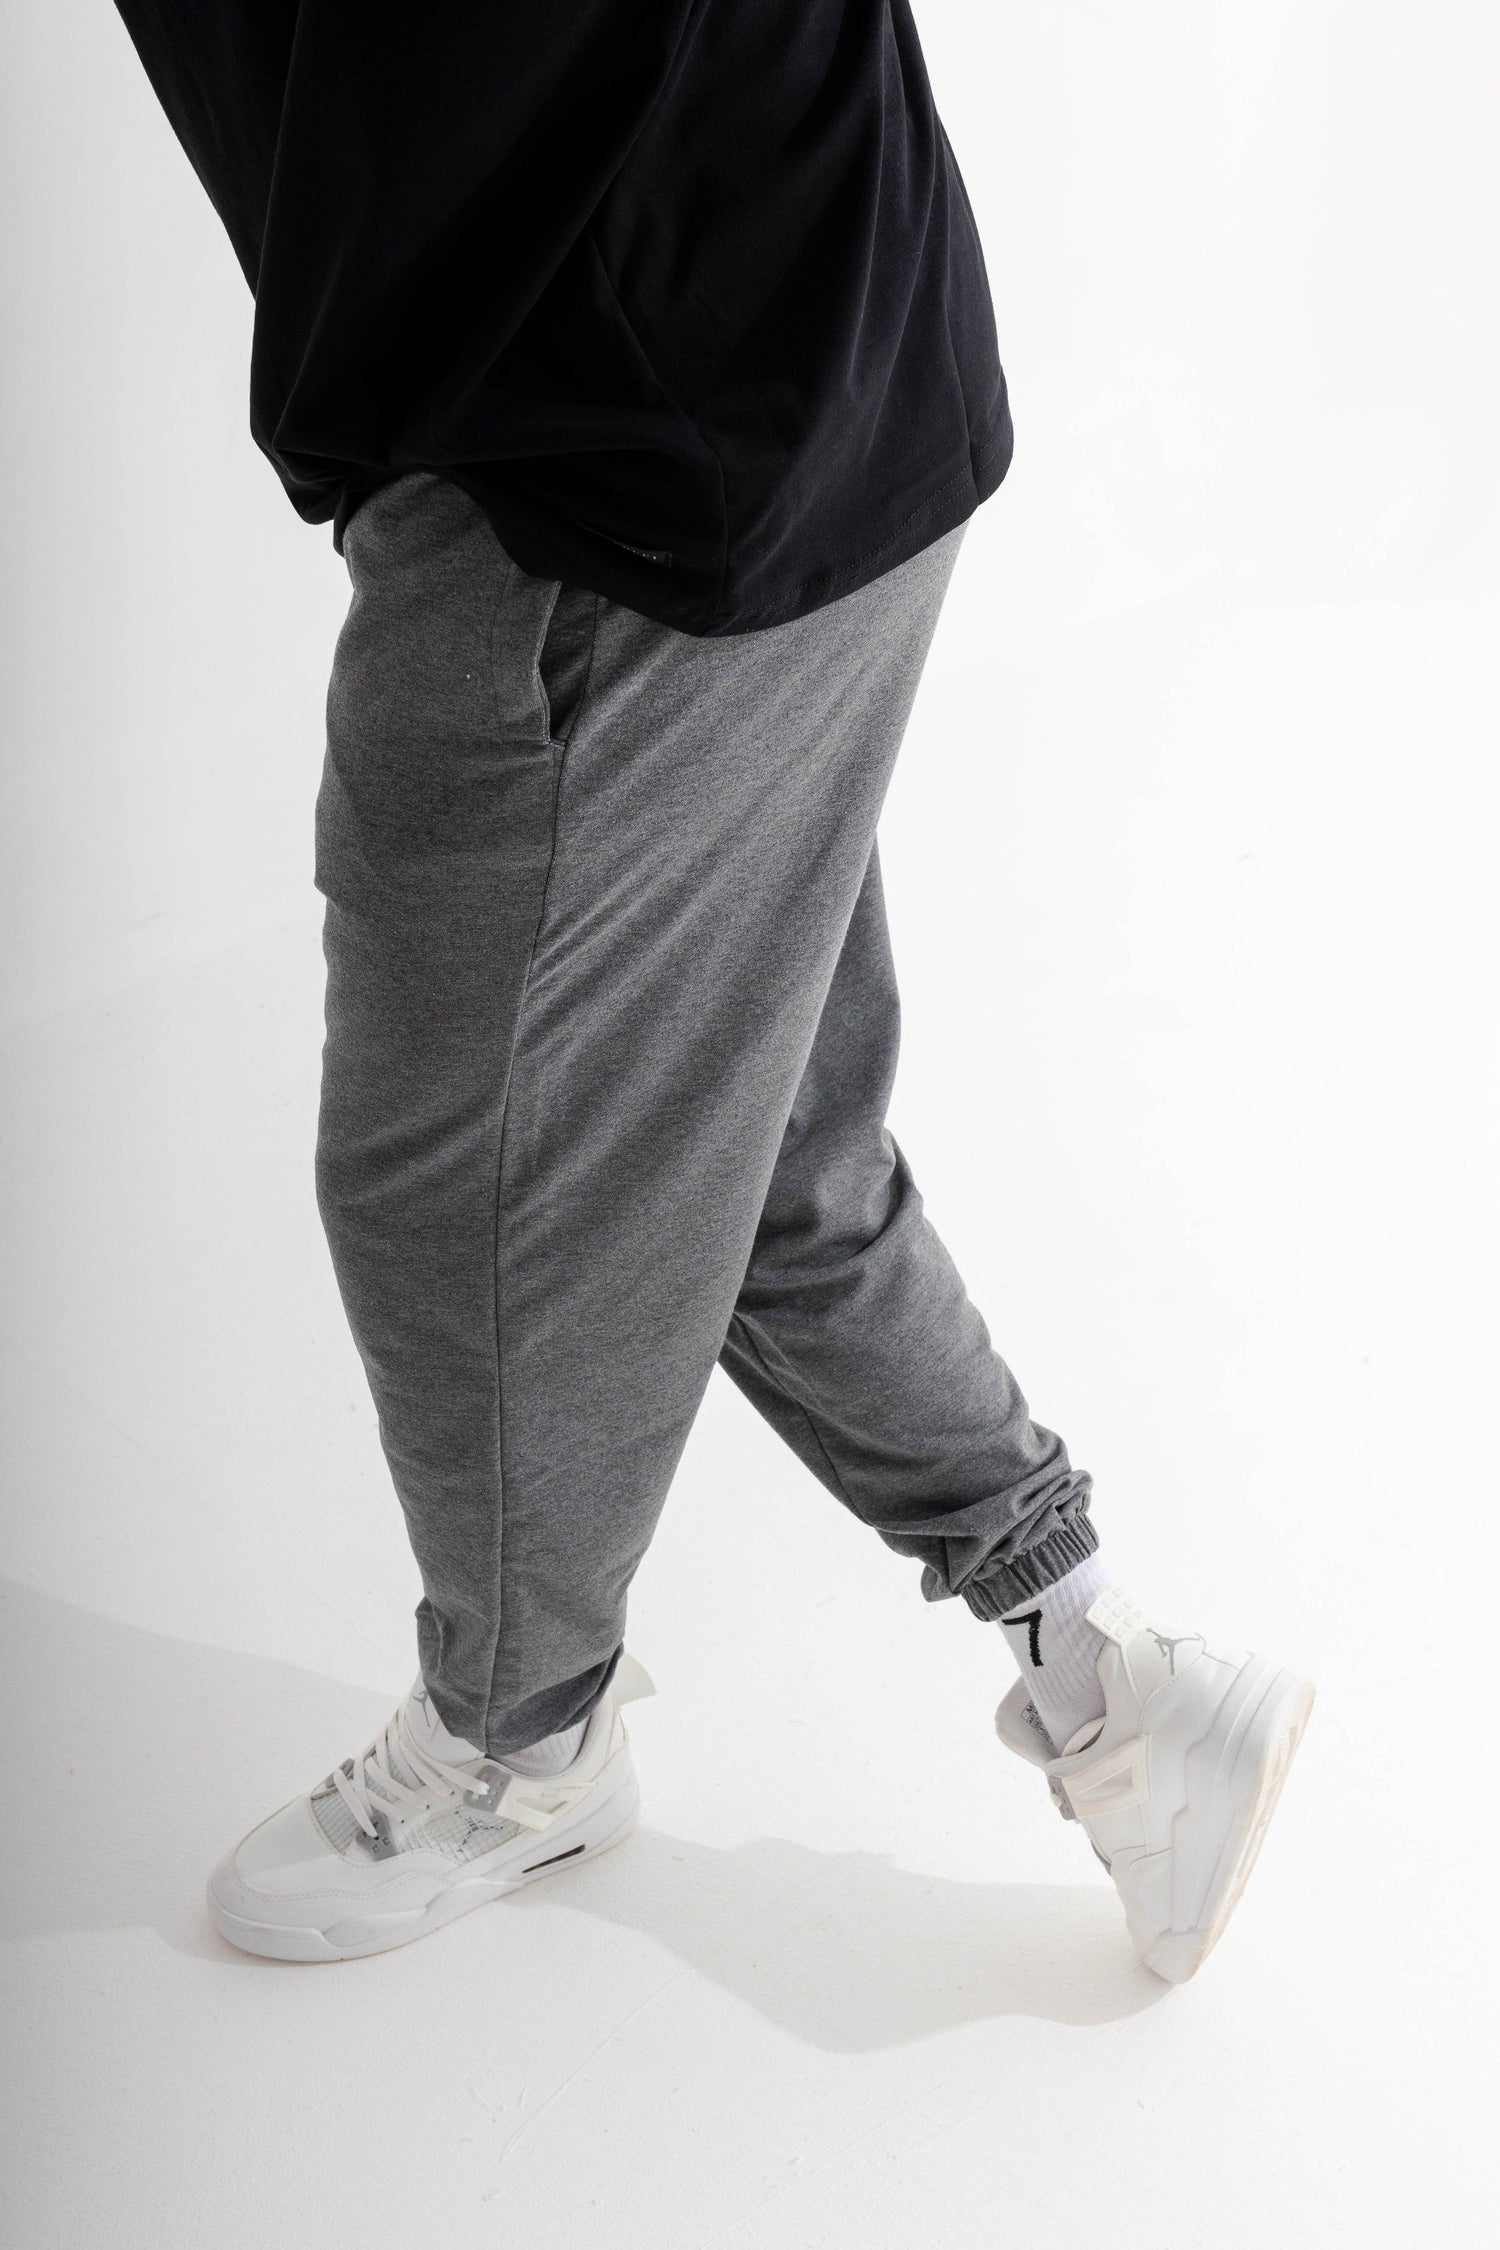 Basic grey sweatpants